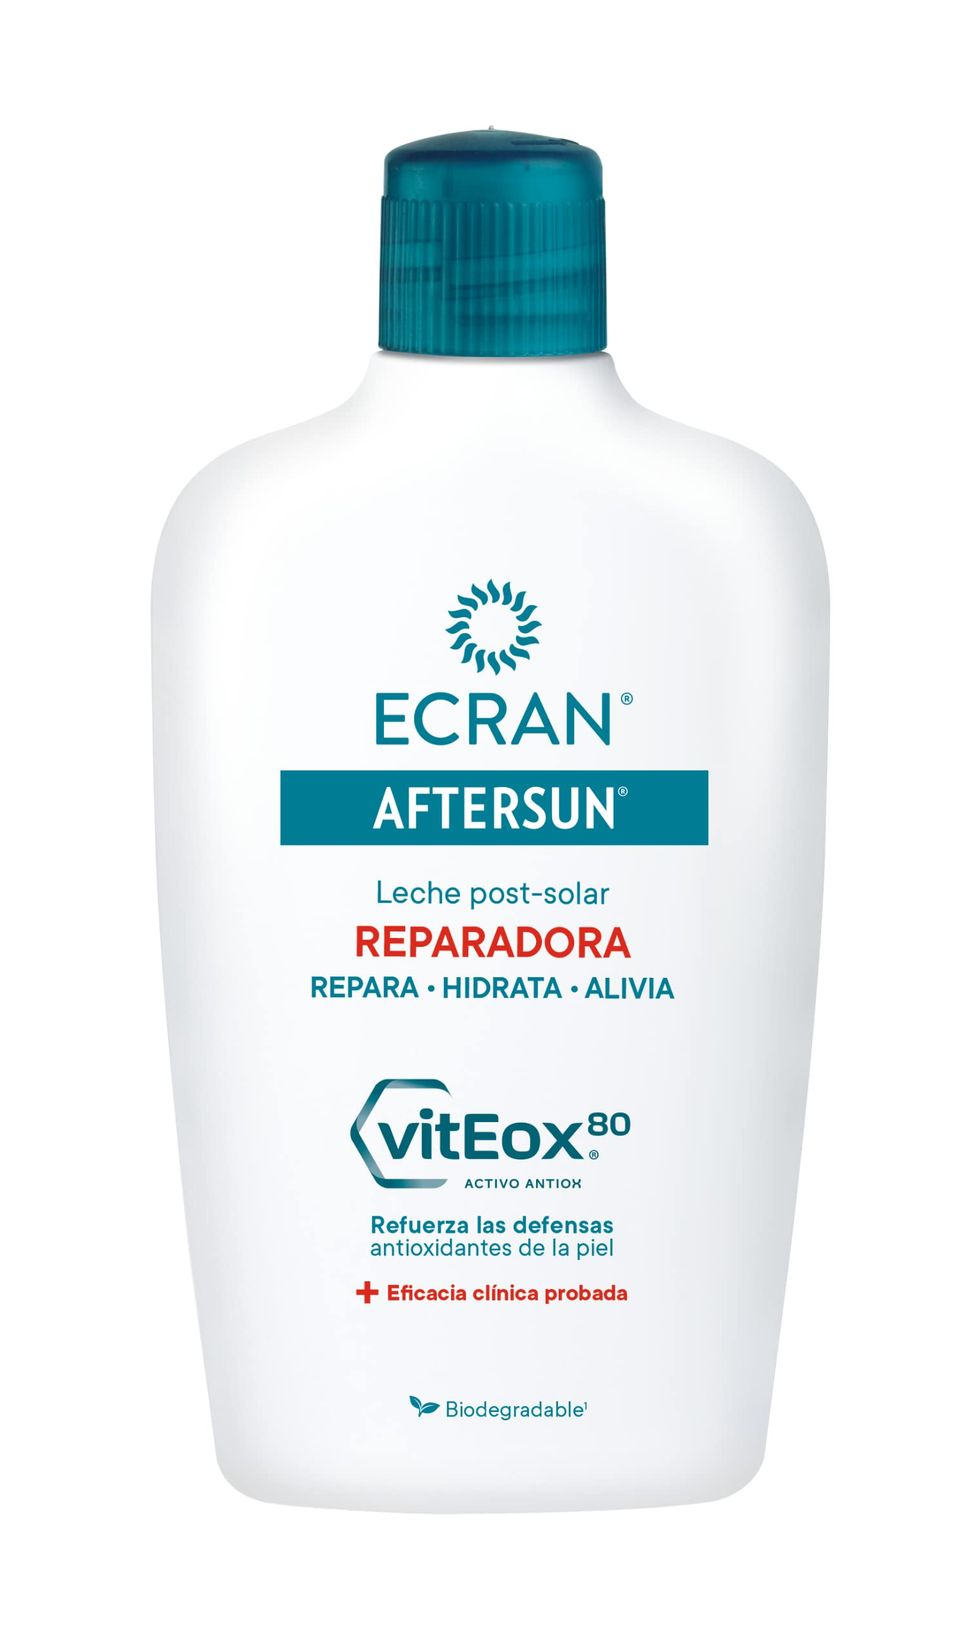 Ecran Aftersun - Leche Post-Solar Reparadora, Repara, Hidrata y Alivia - 400 ml